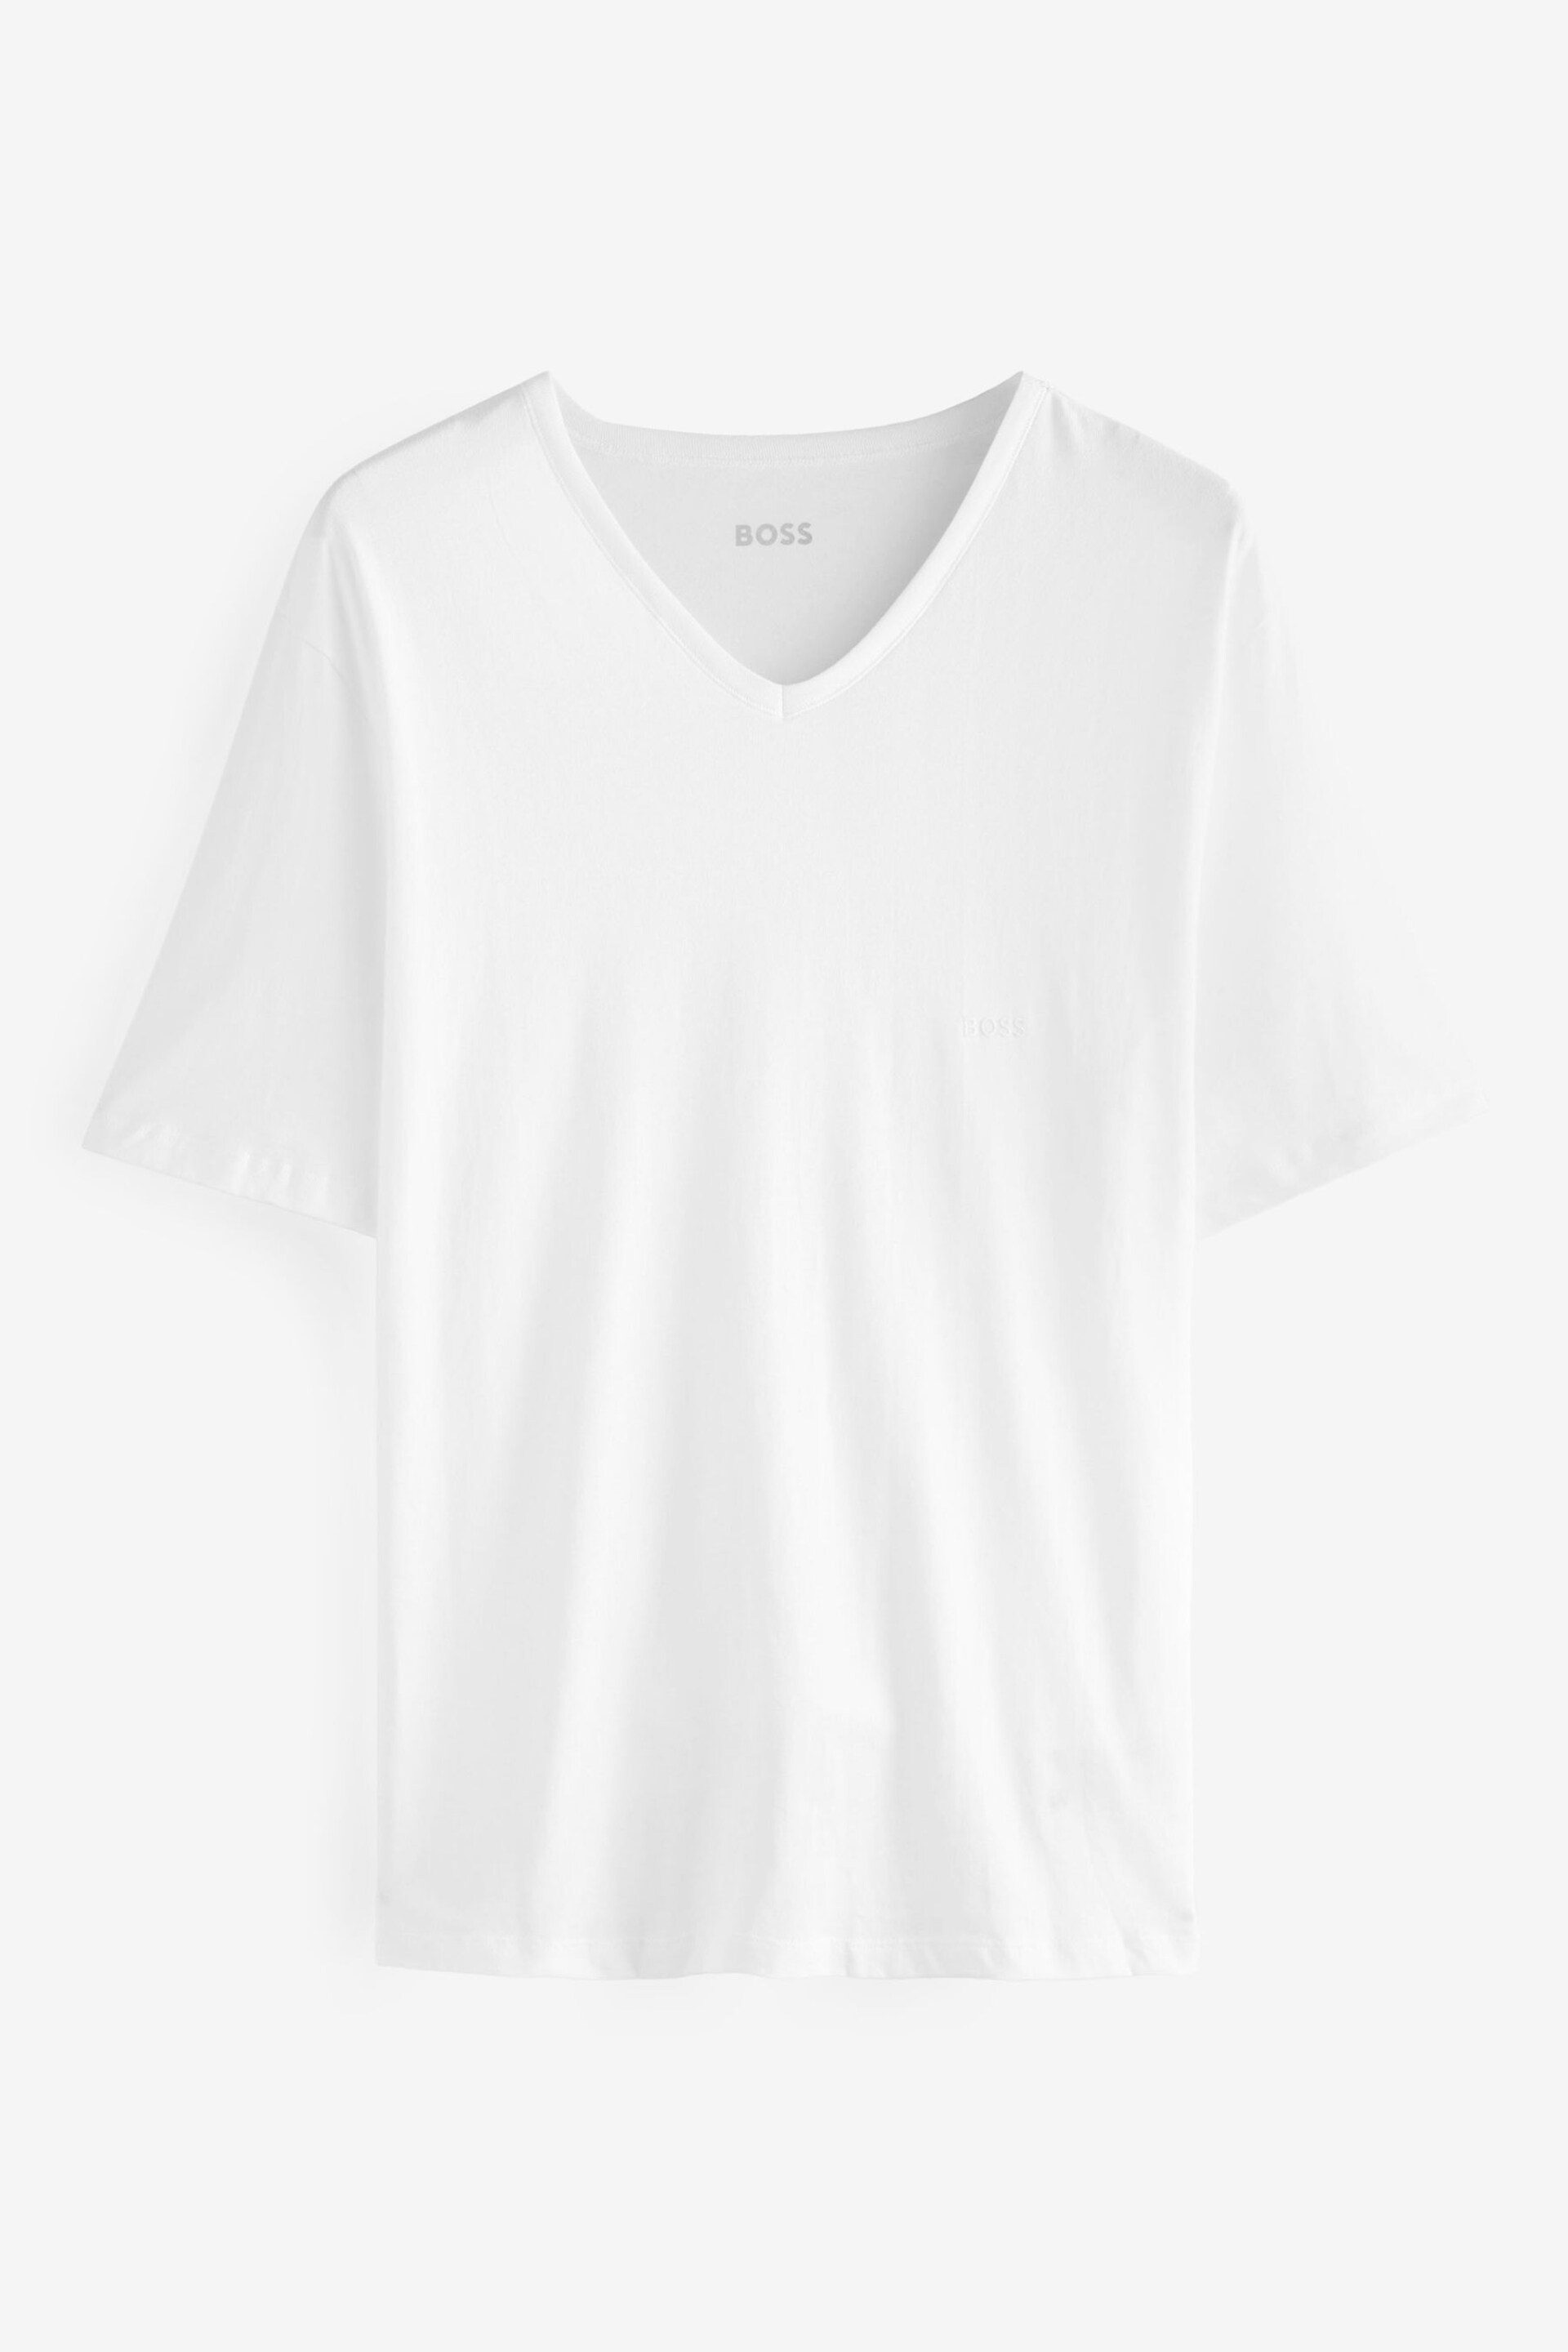 BOSS Black Classic V-Neck T-Shirts 3 Pack - Image 5 of 9